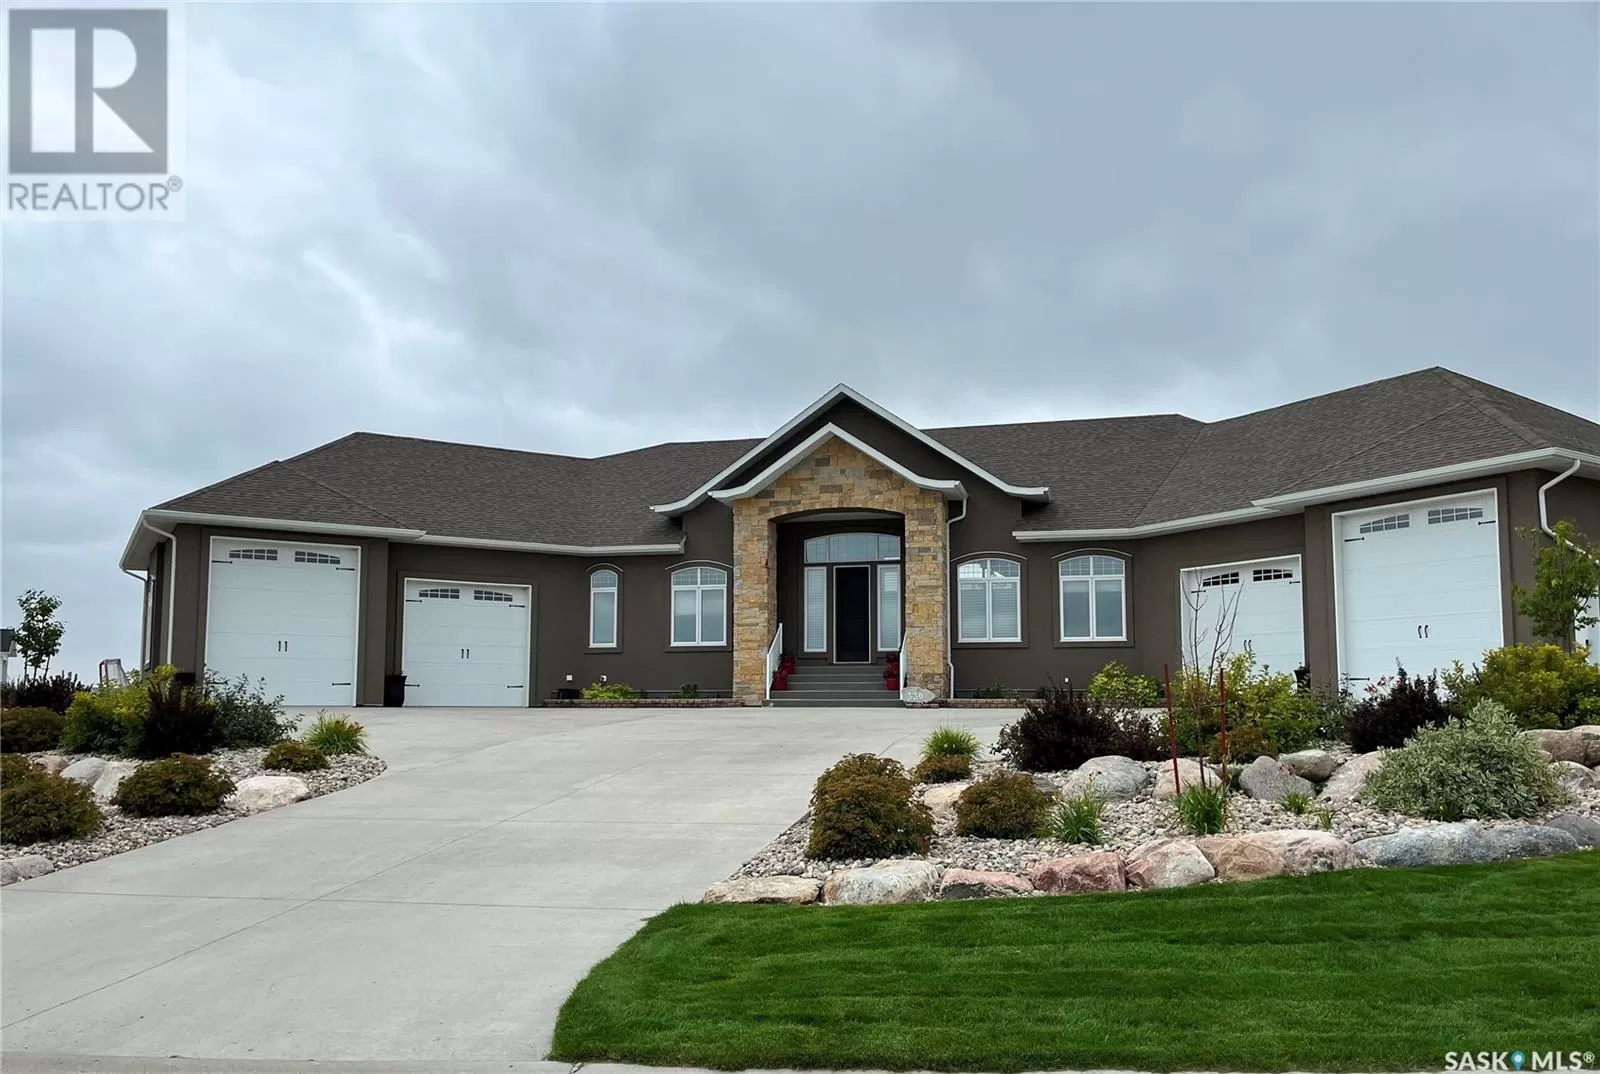 House for rent: 330 Spruce Creek Drive, Edenwold Rm No. 158, Saskatchewan S0G 3Z0